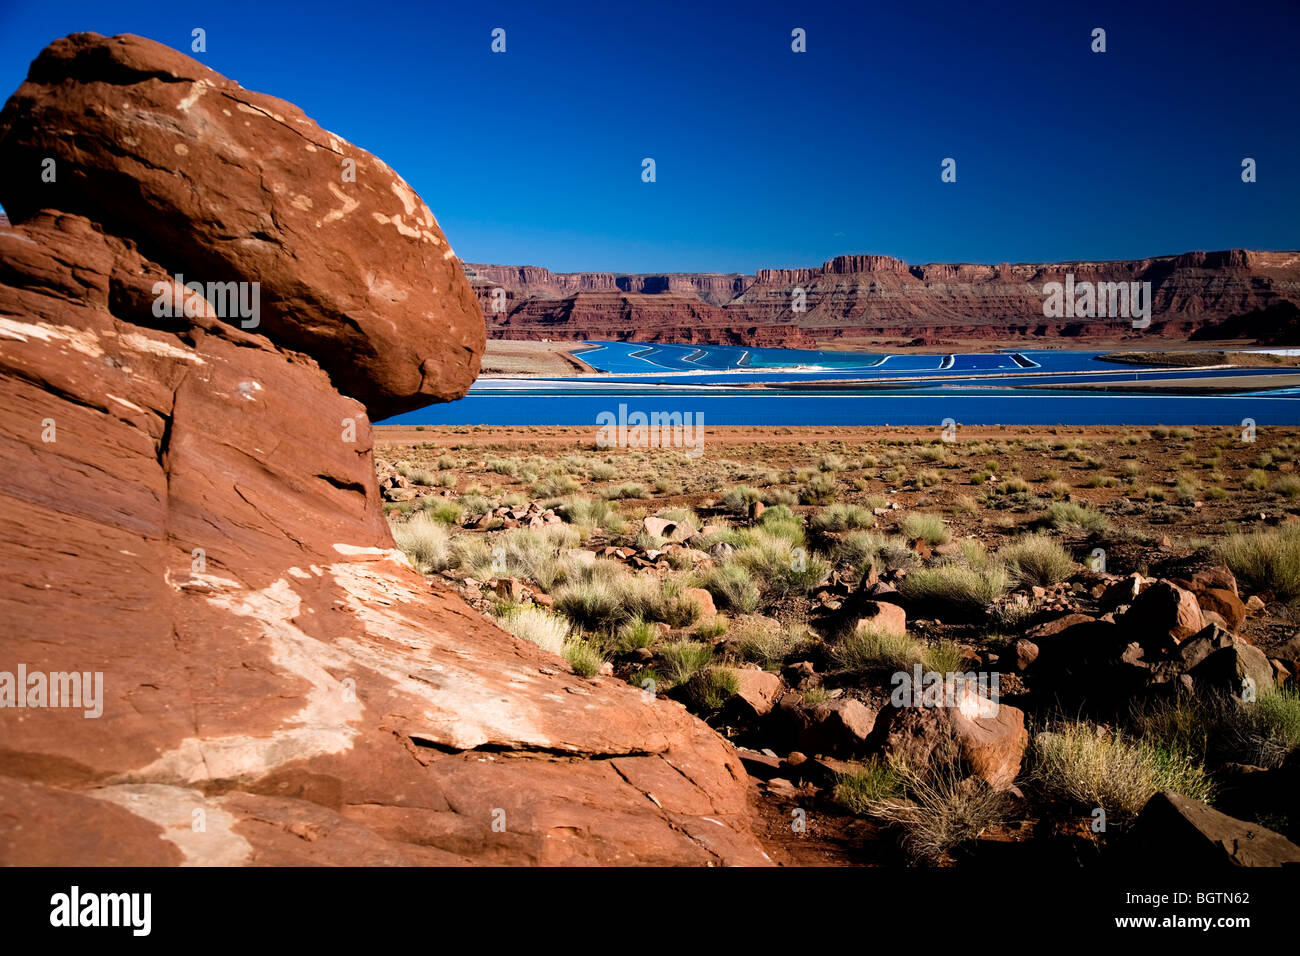 Scene overlooking the bight blue Cane Creek potash mine water evaporation ponds near Moab, Utah, USA Stock Photo